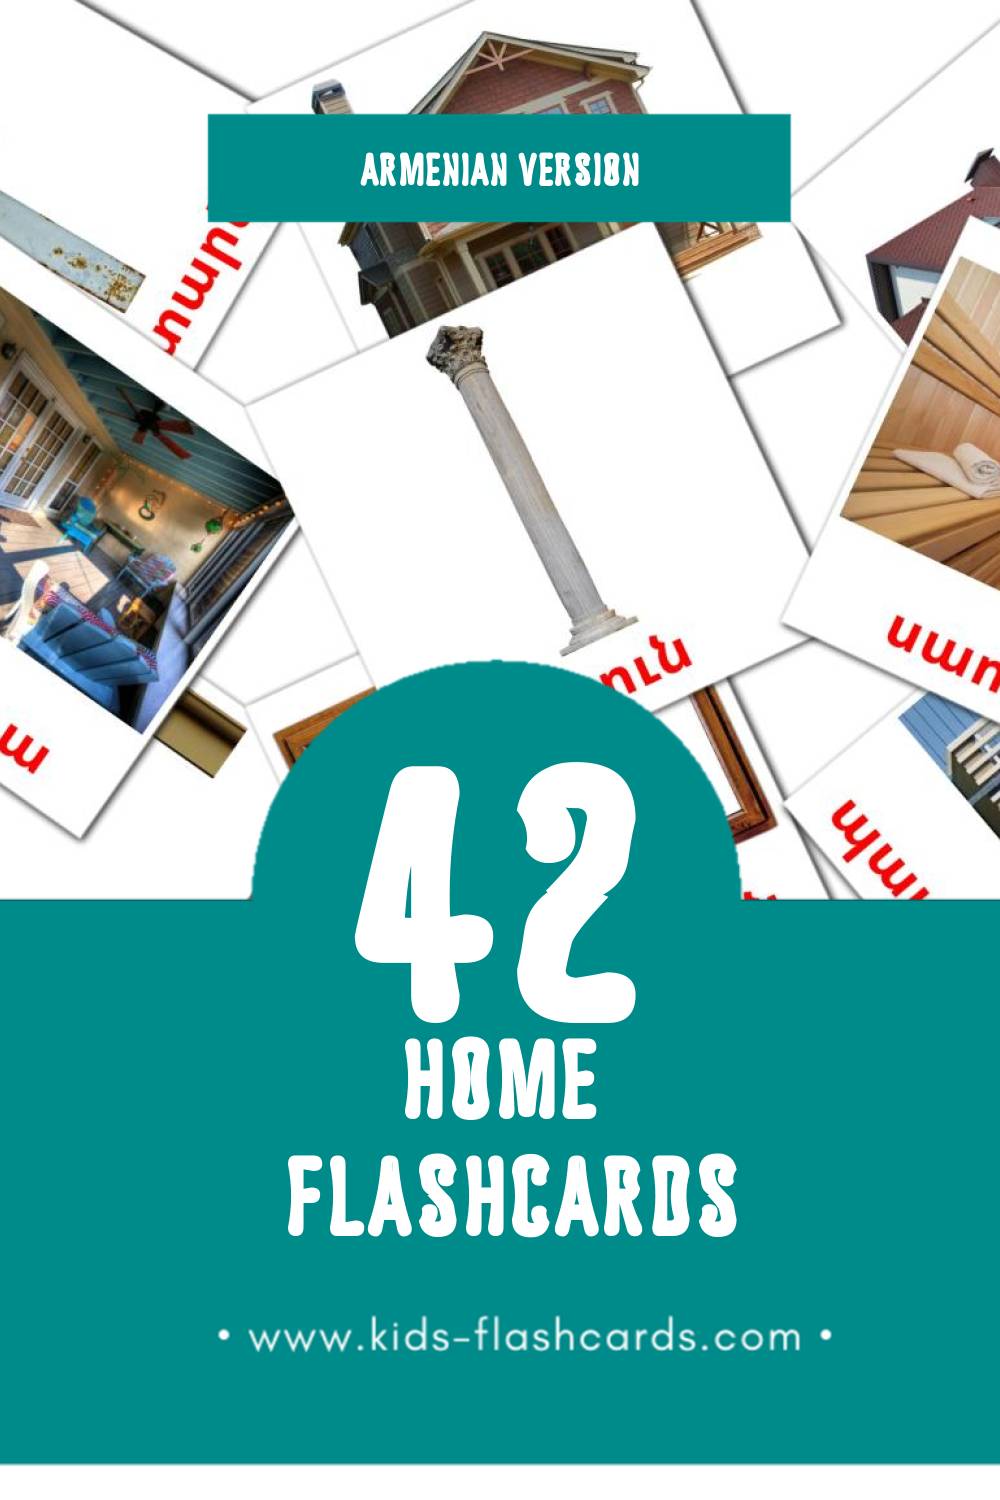 Visual տուն Flashcards for Toddlers (48 cards in Armenian)